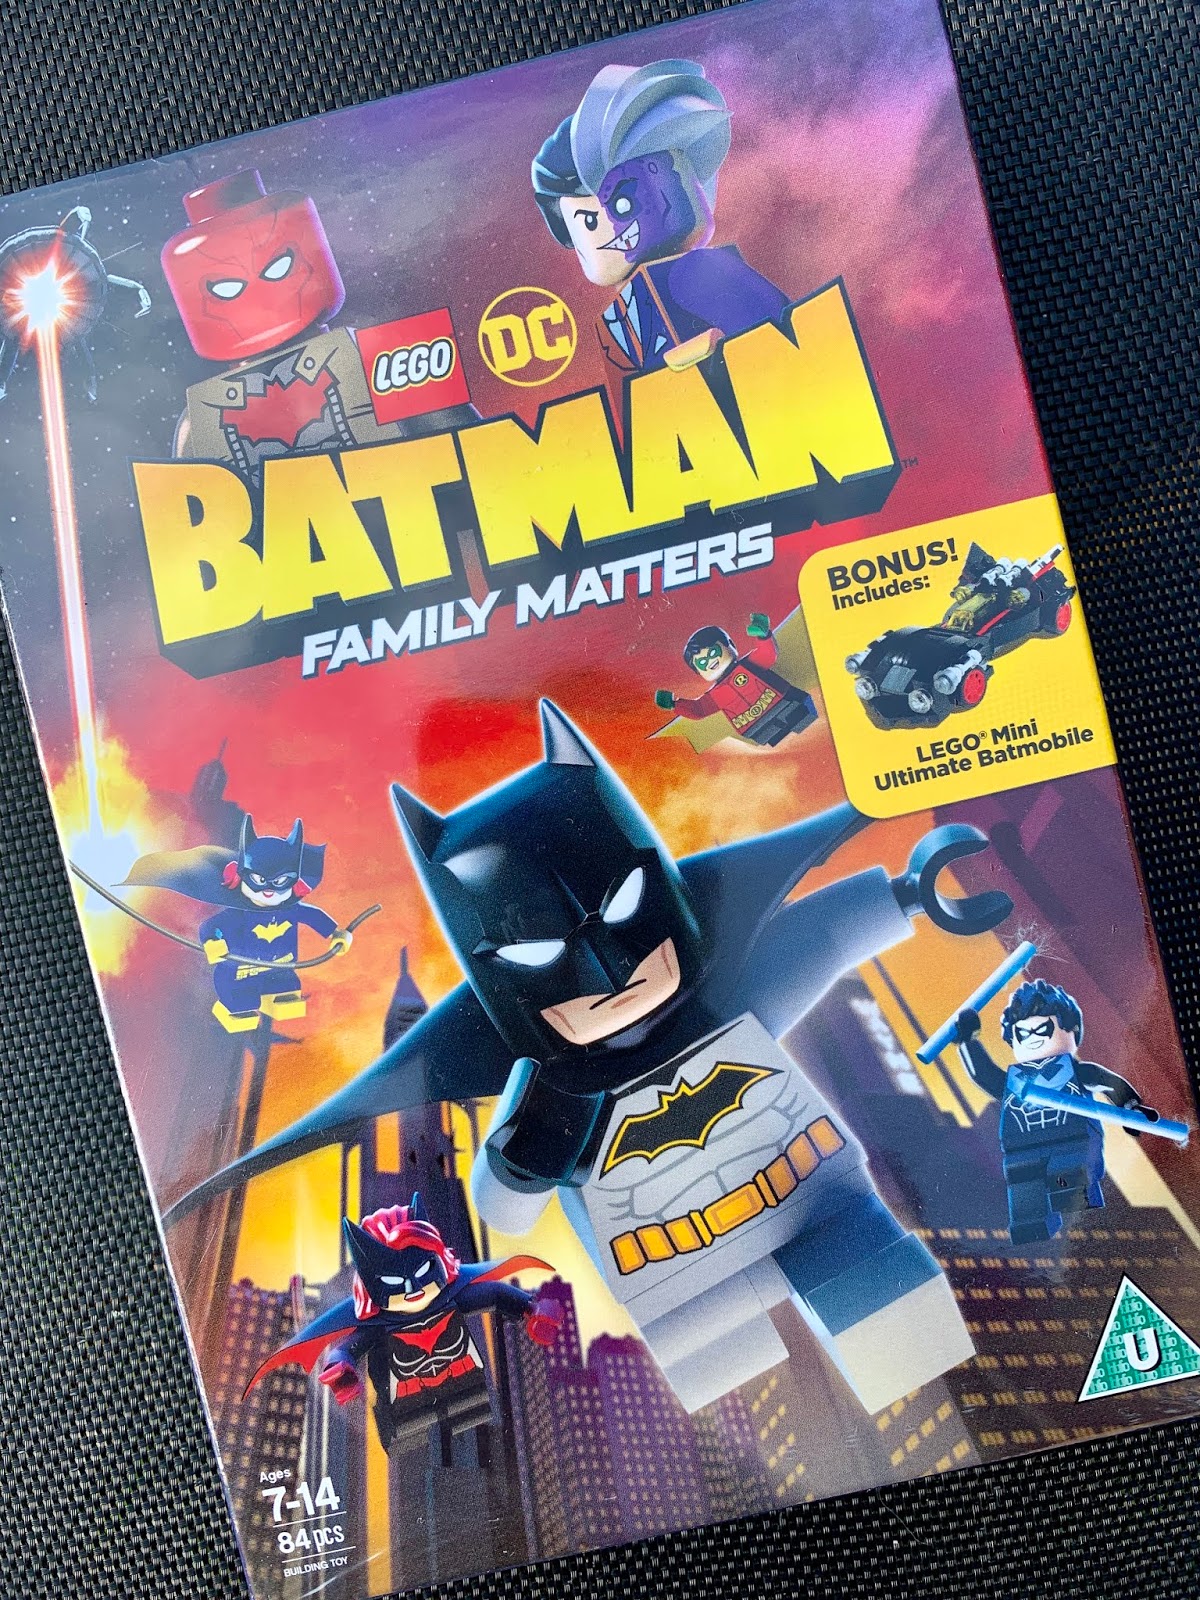 NEW! LEGO DC: Batman Family Matters- review plus DVD GIVEAWAY